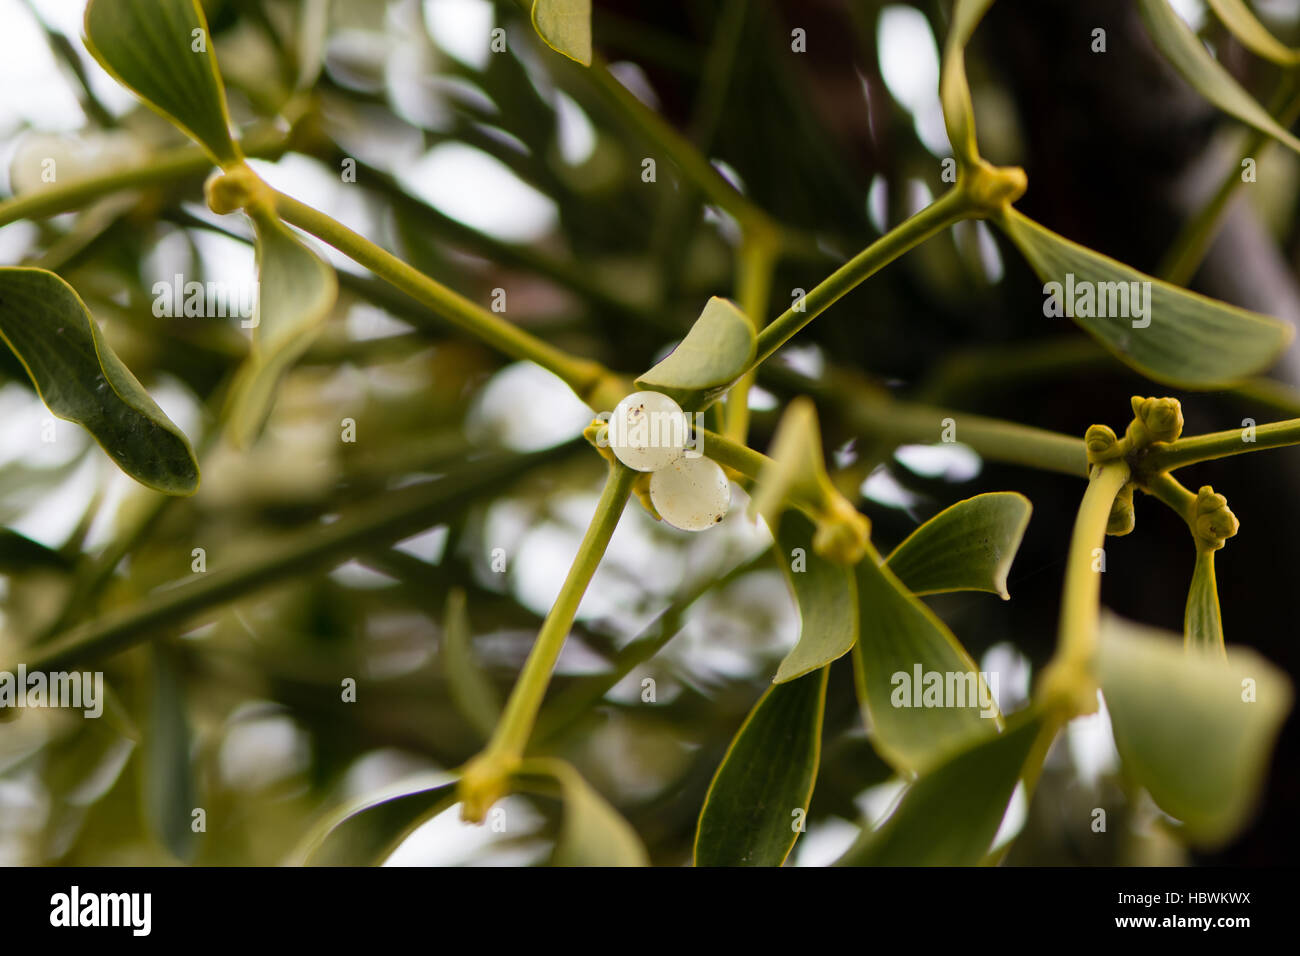 Mistletoe (Viscum album) plant with berries. Evergreen hemi-parasitic shrub in the family Santalaceae, growing on hawthorn Stock Photo